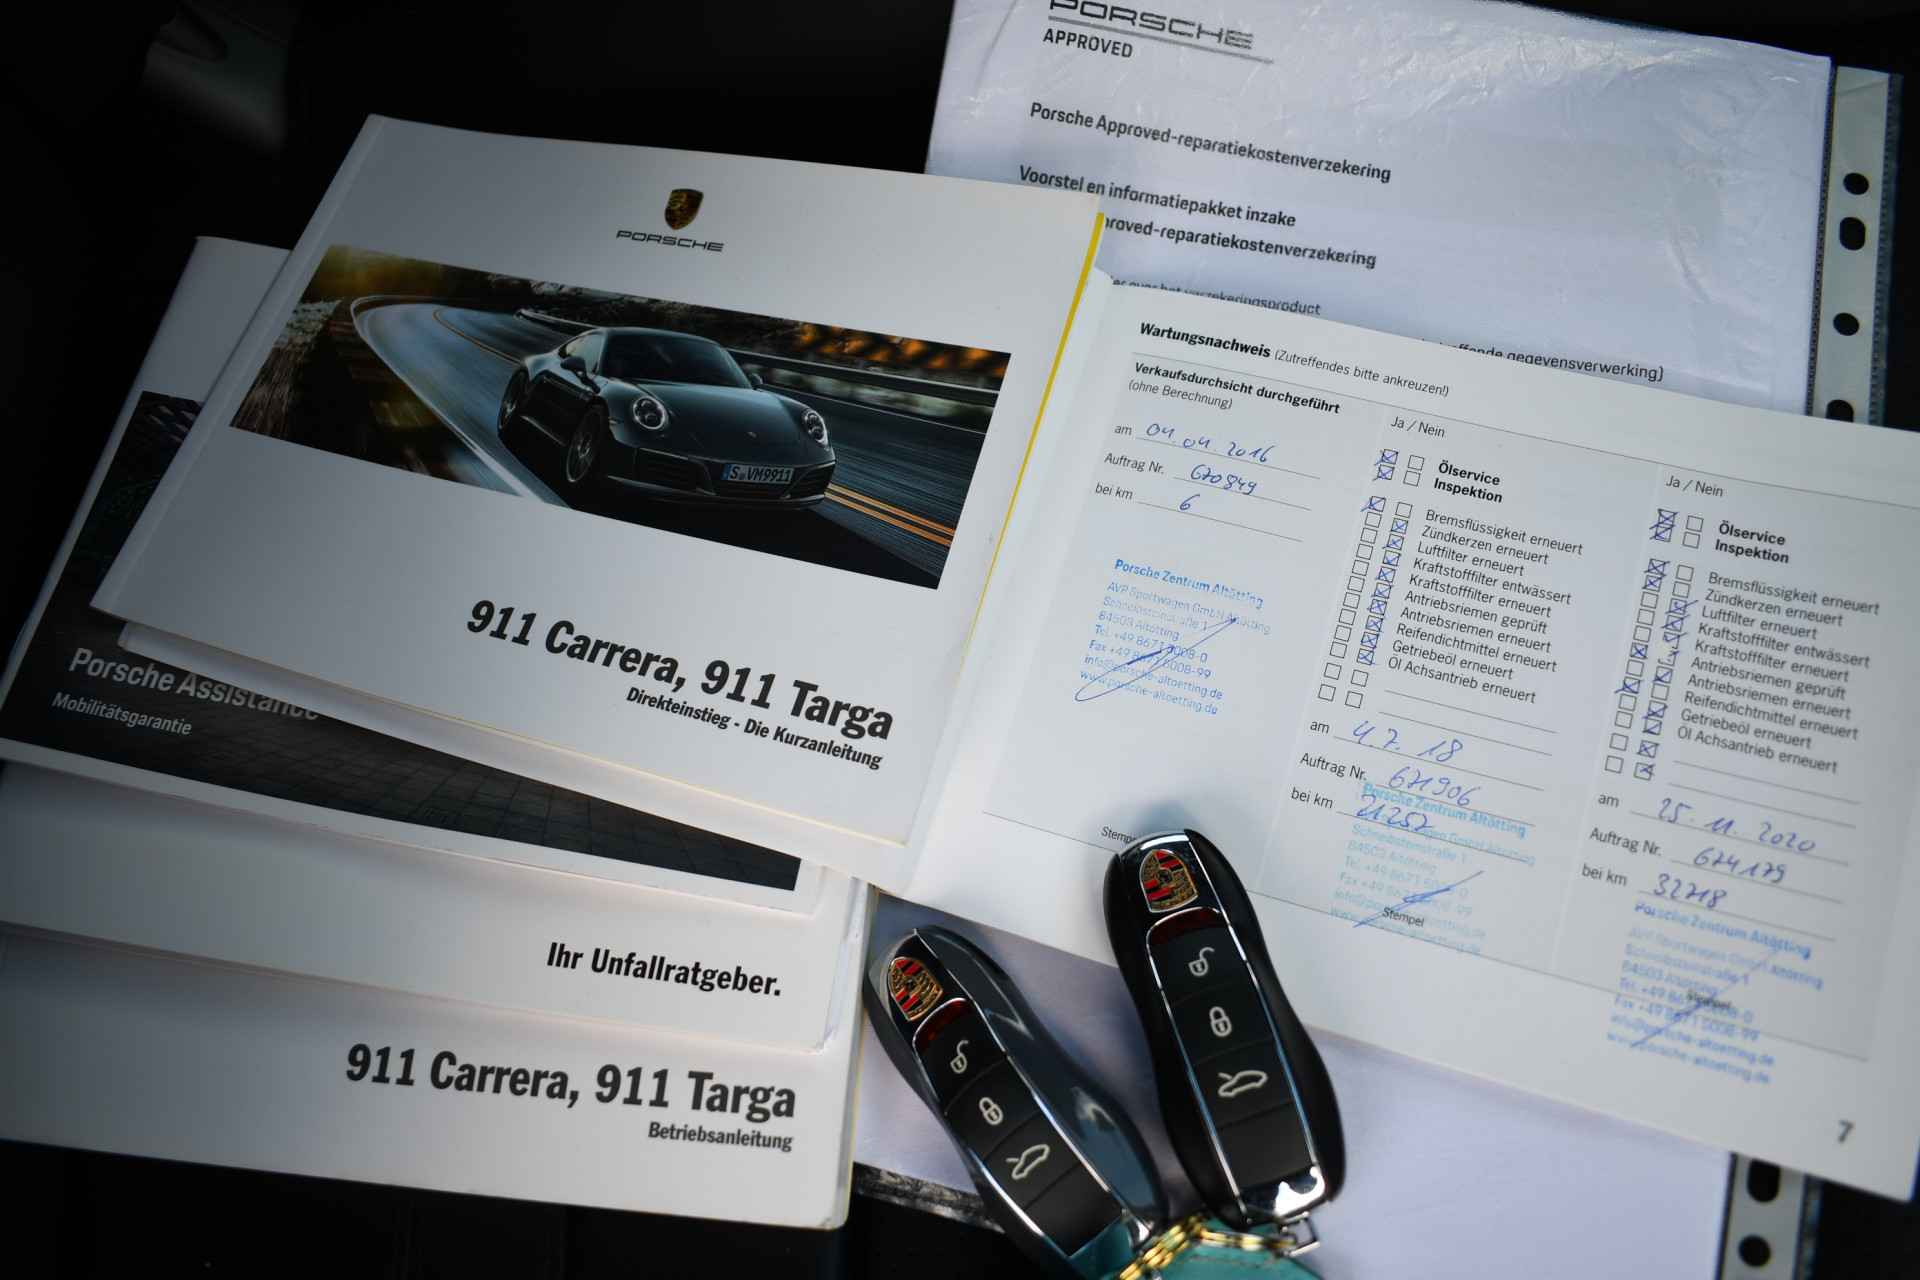 Porsche approved garantie inclusief